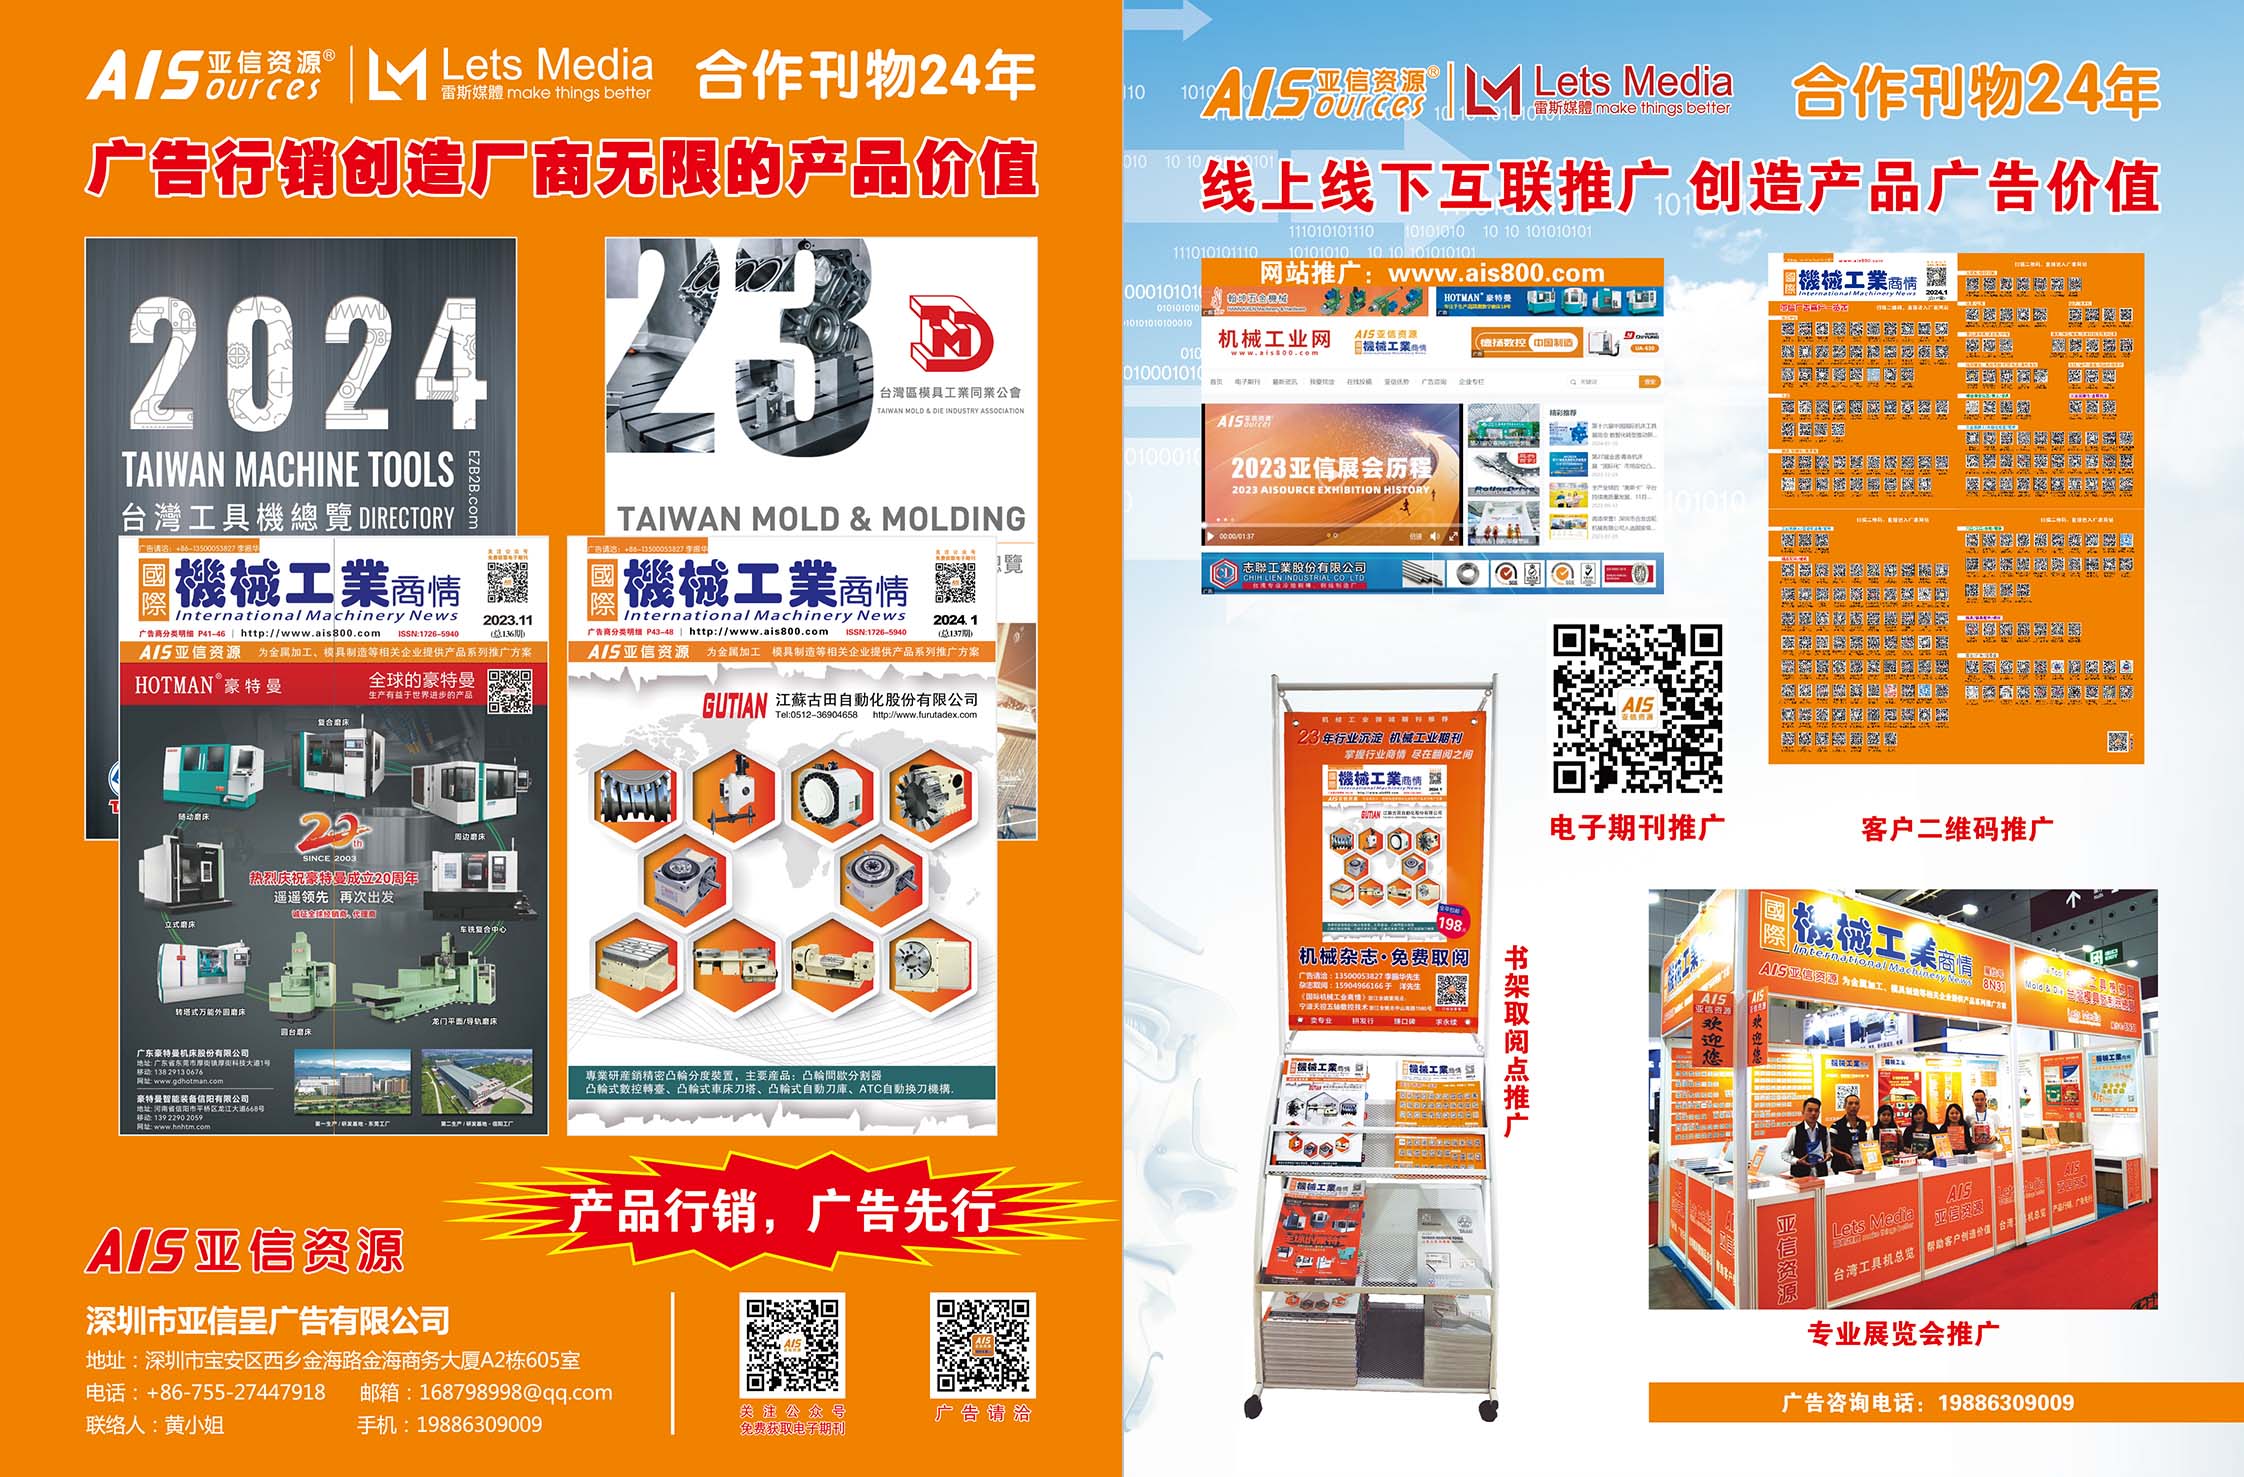 2023 Taiwan Machine Tools Directory